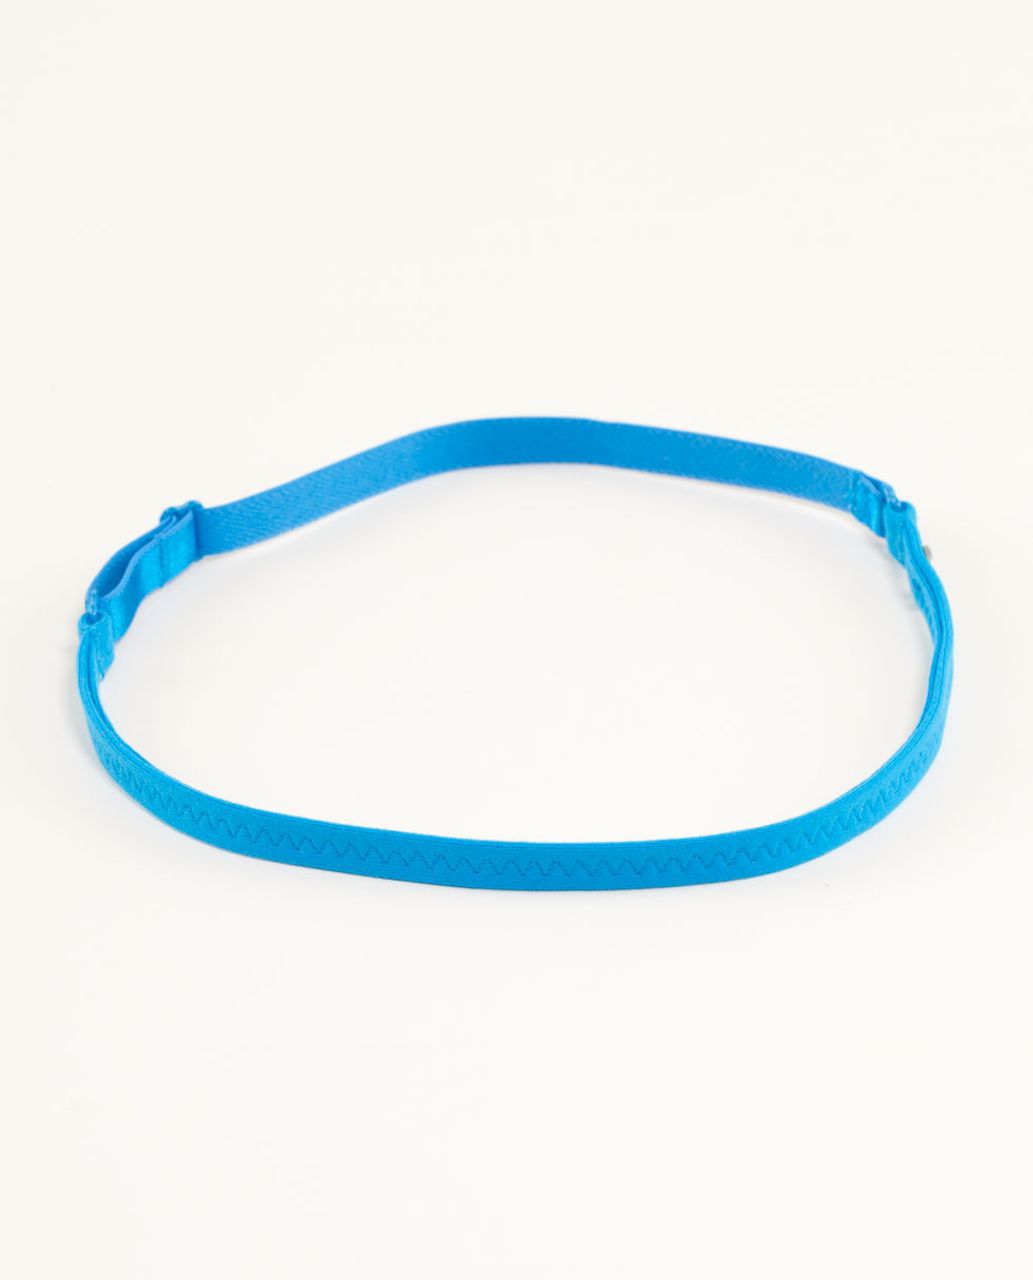 Lululemon Strappy Headband - Beach Blanket Blue